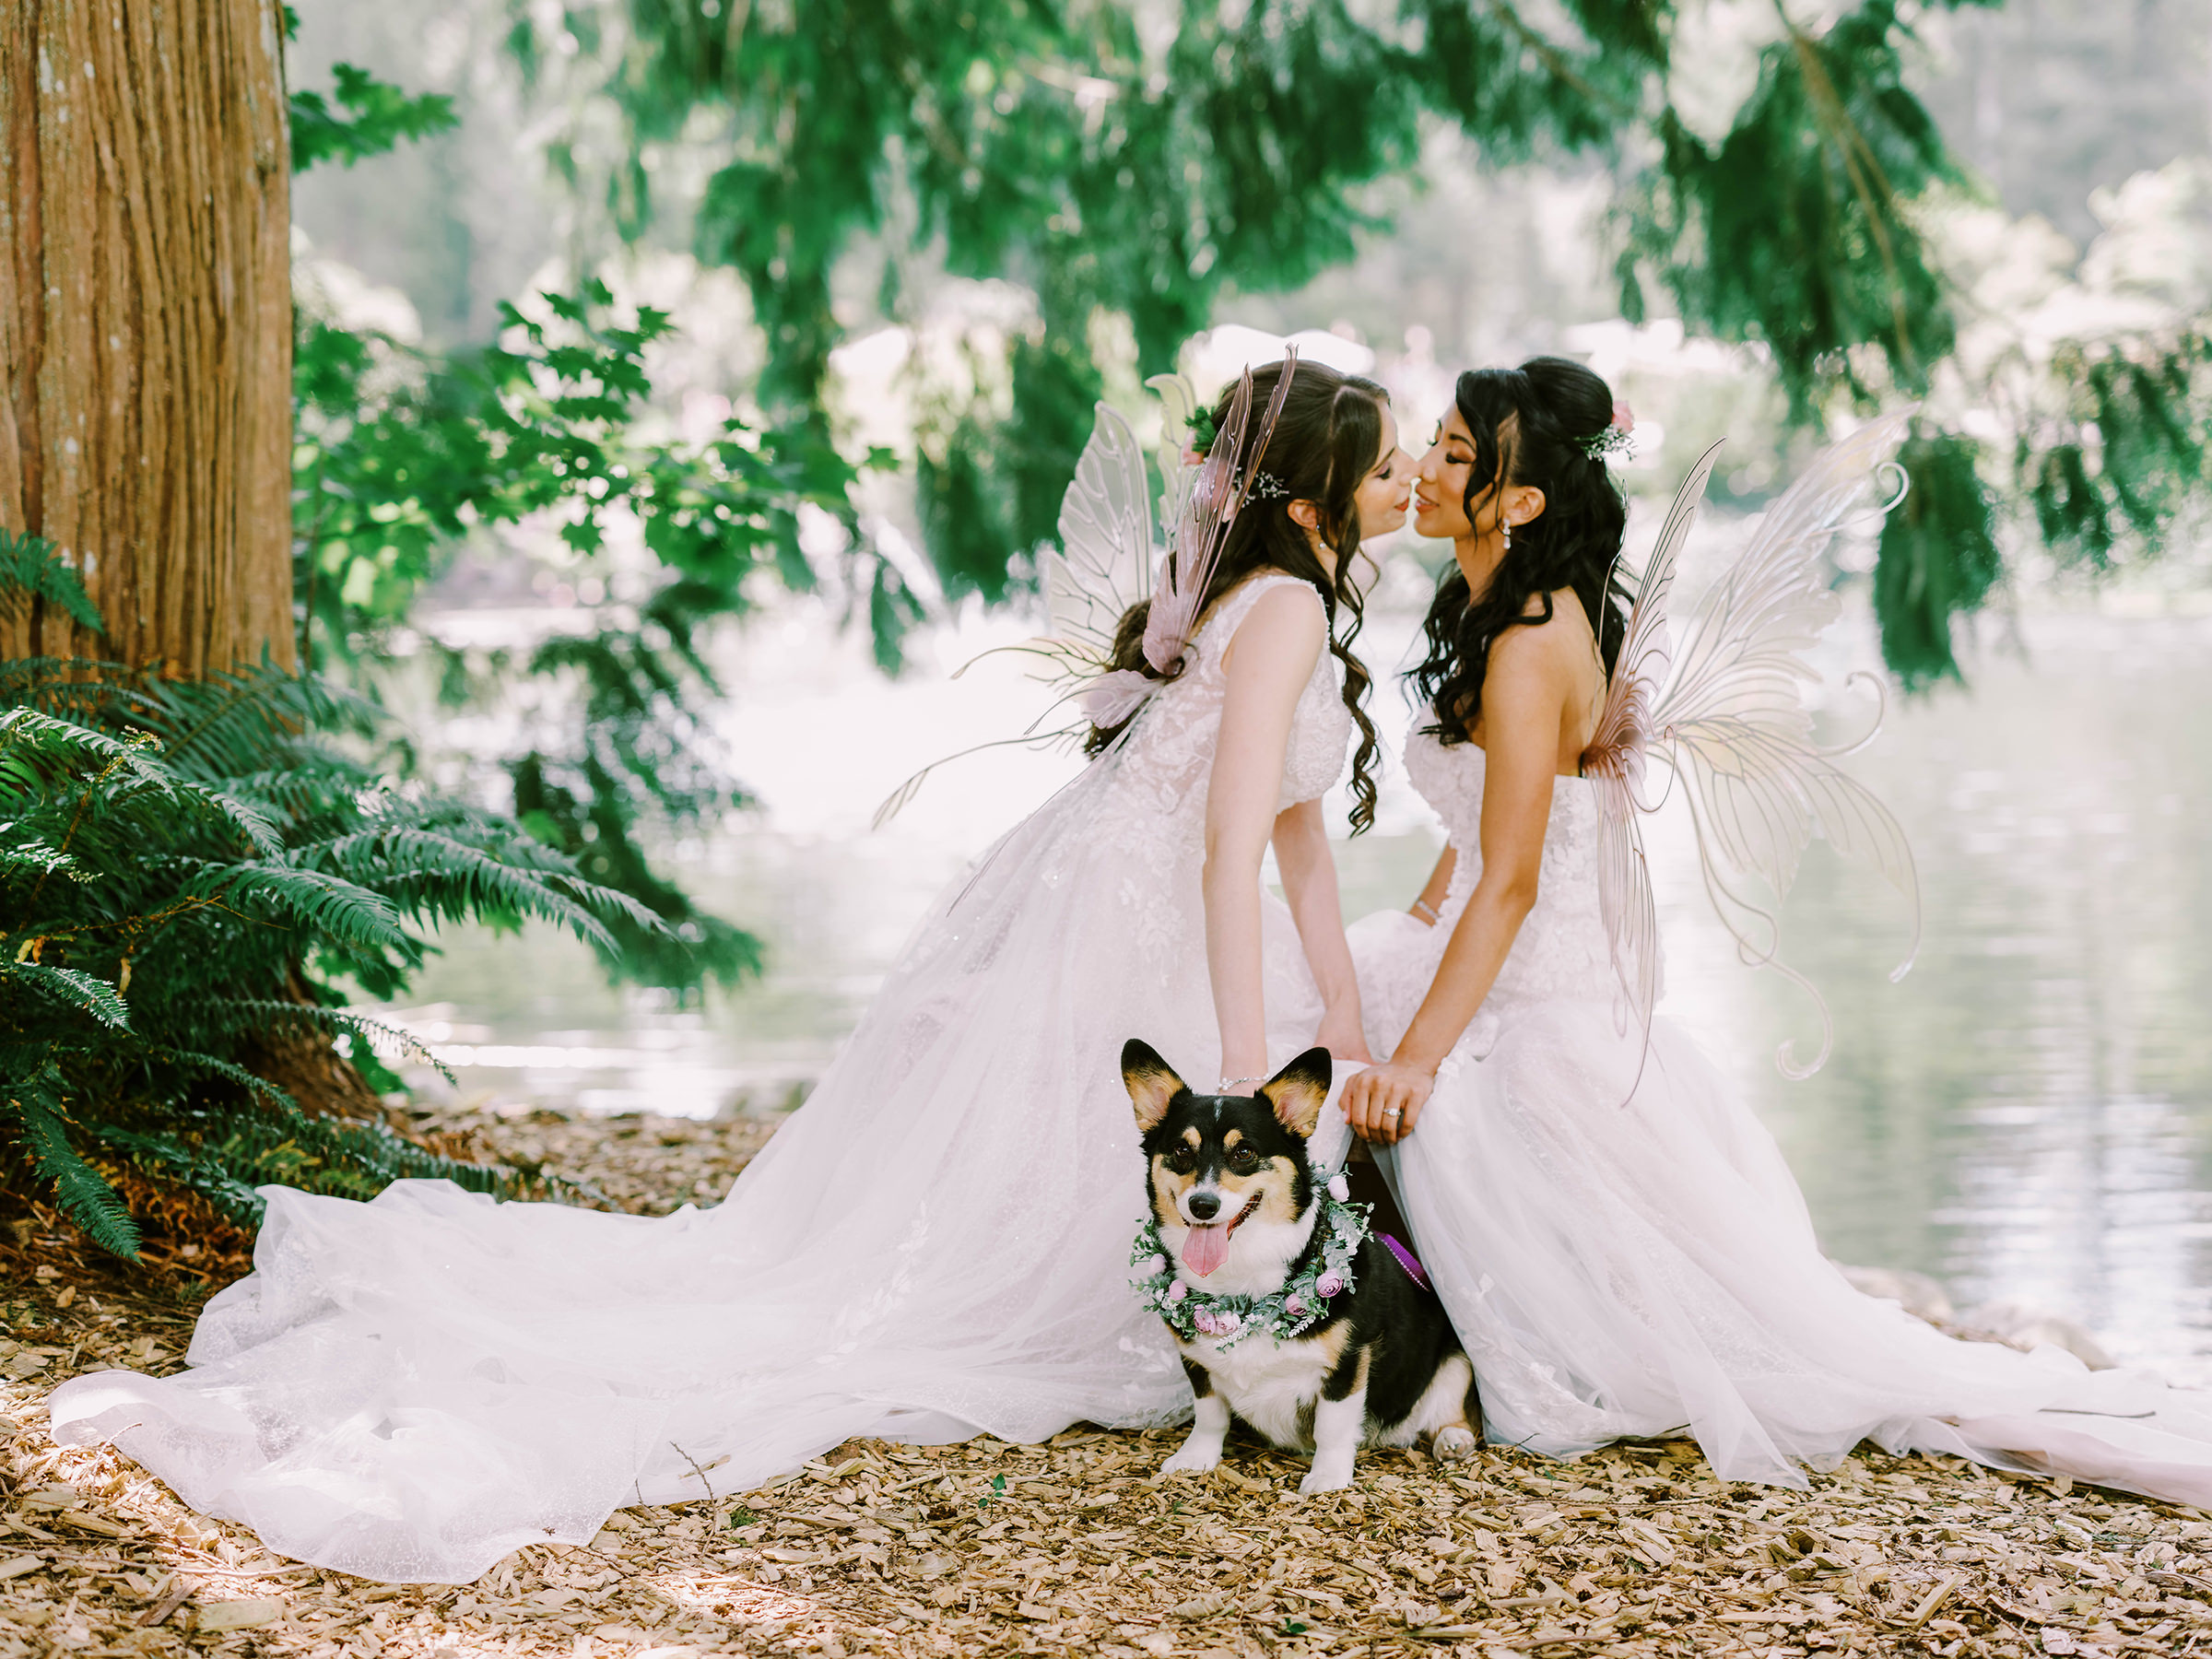 Megan and Erika's wedding photos with their sweet Corgi at Graybridge Venue in Snohomish WA, summer 2022